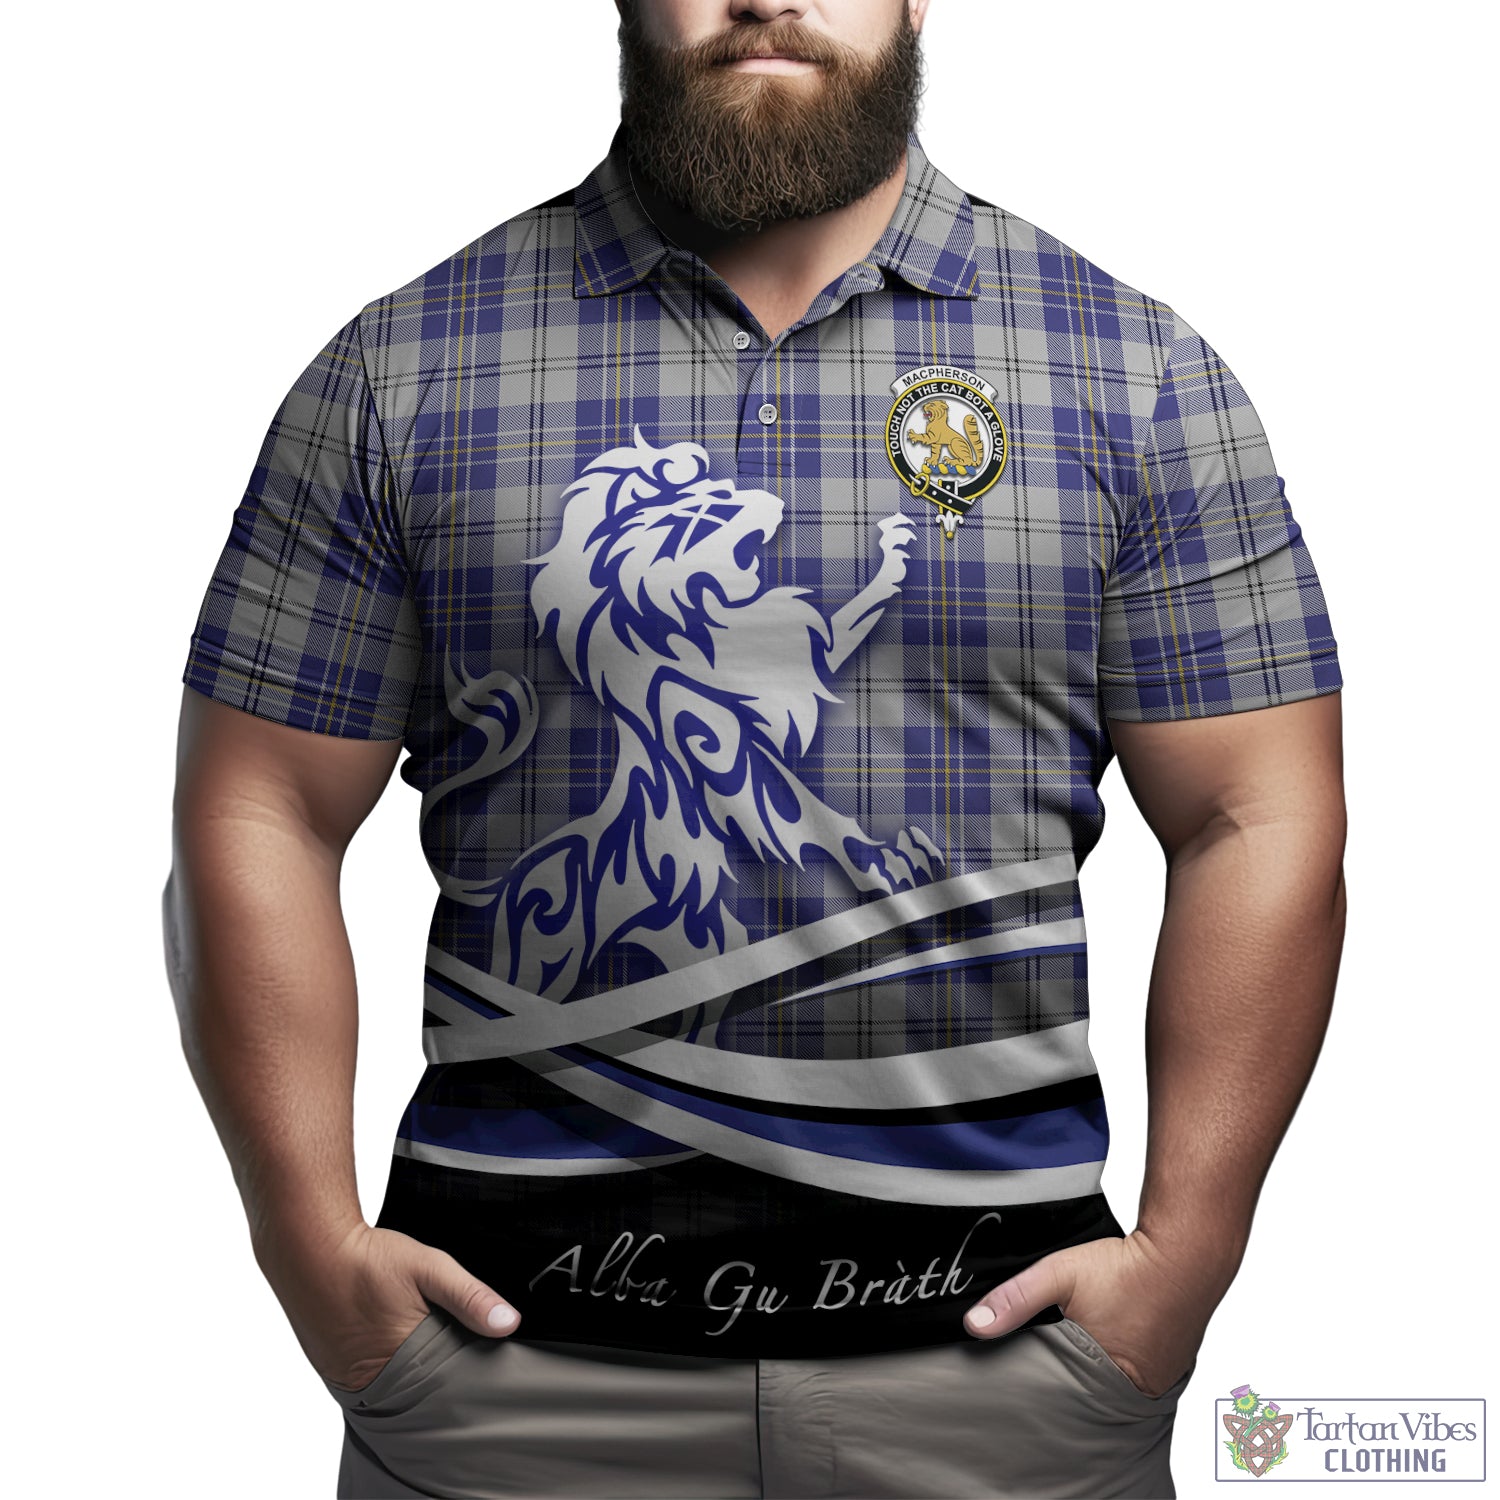 macpherson-dress-blue-tartan-polo-shirt-with-alba-gu-brath-regal-lion-emblem